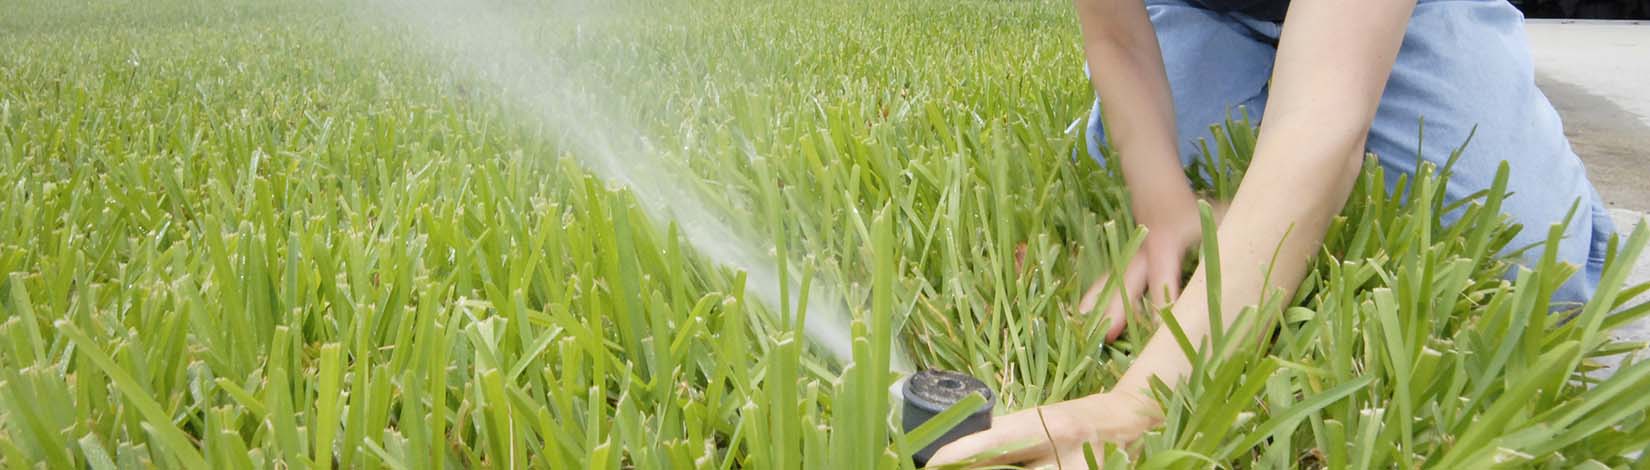 Woman adjusting sprinklers for lawn maintenance